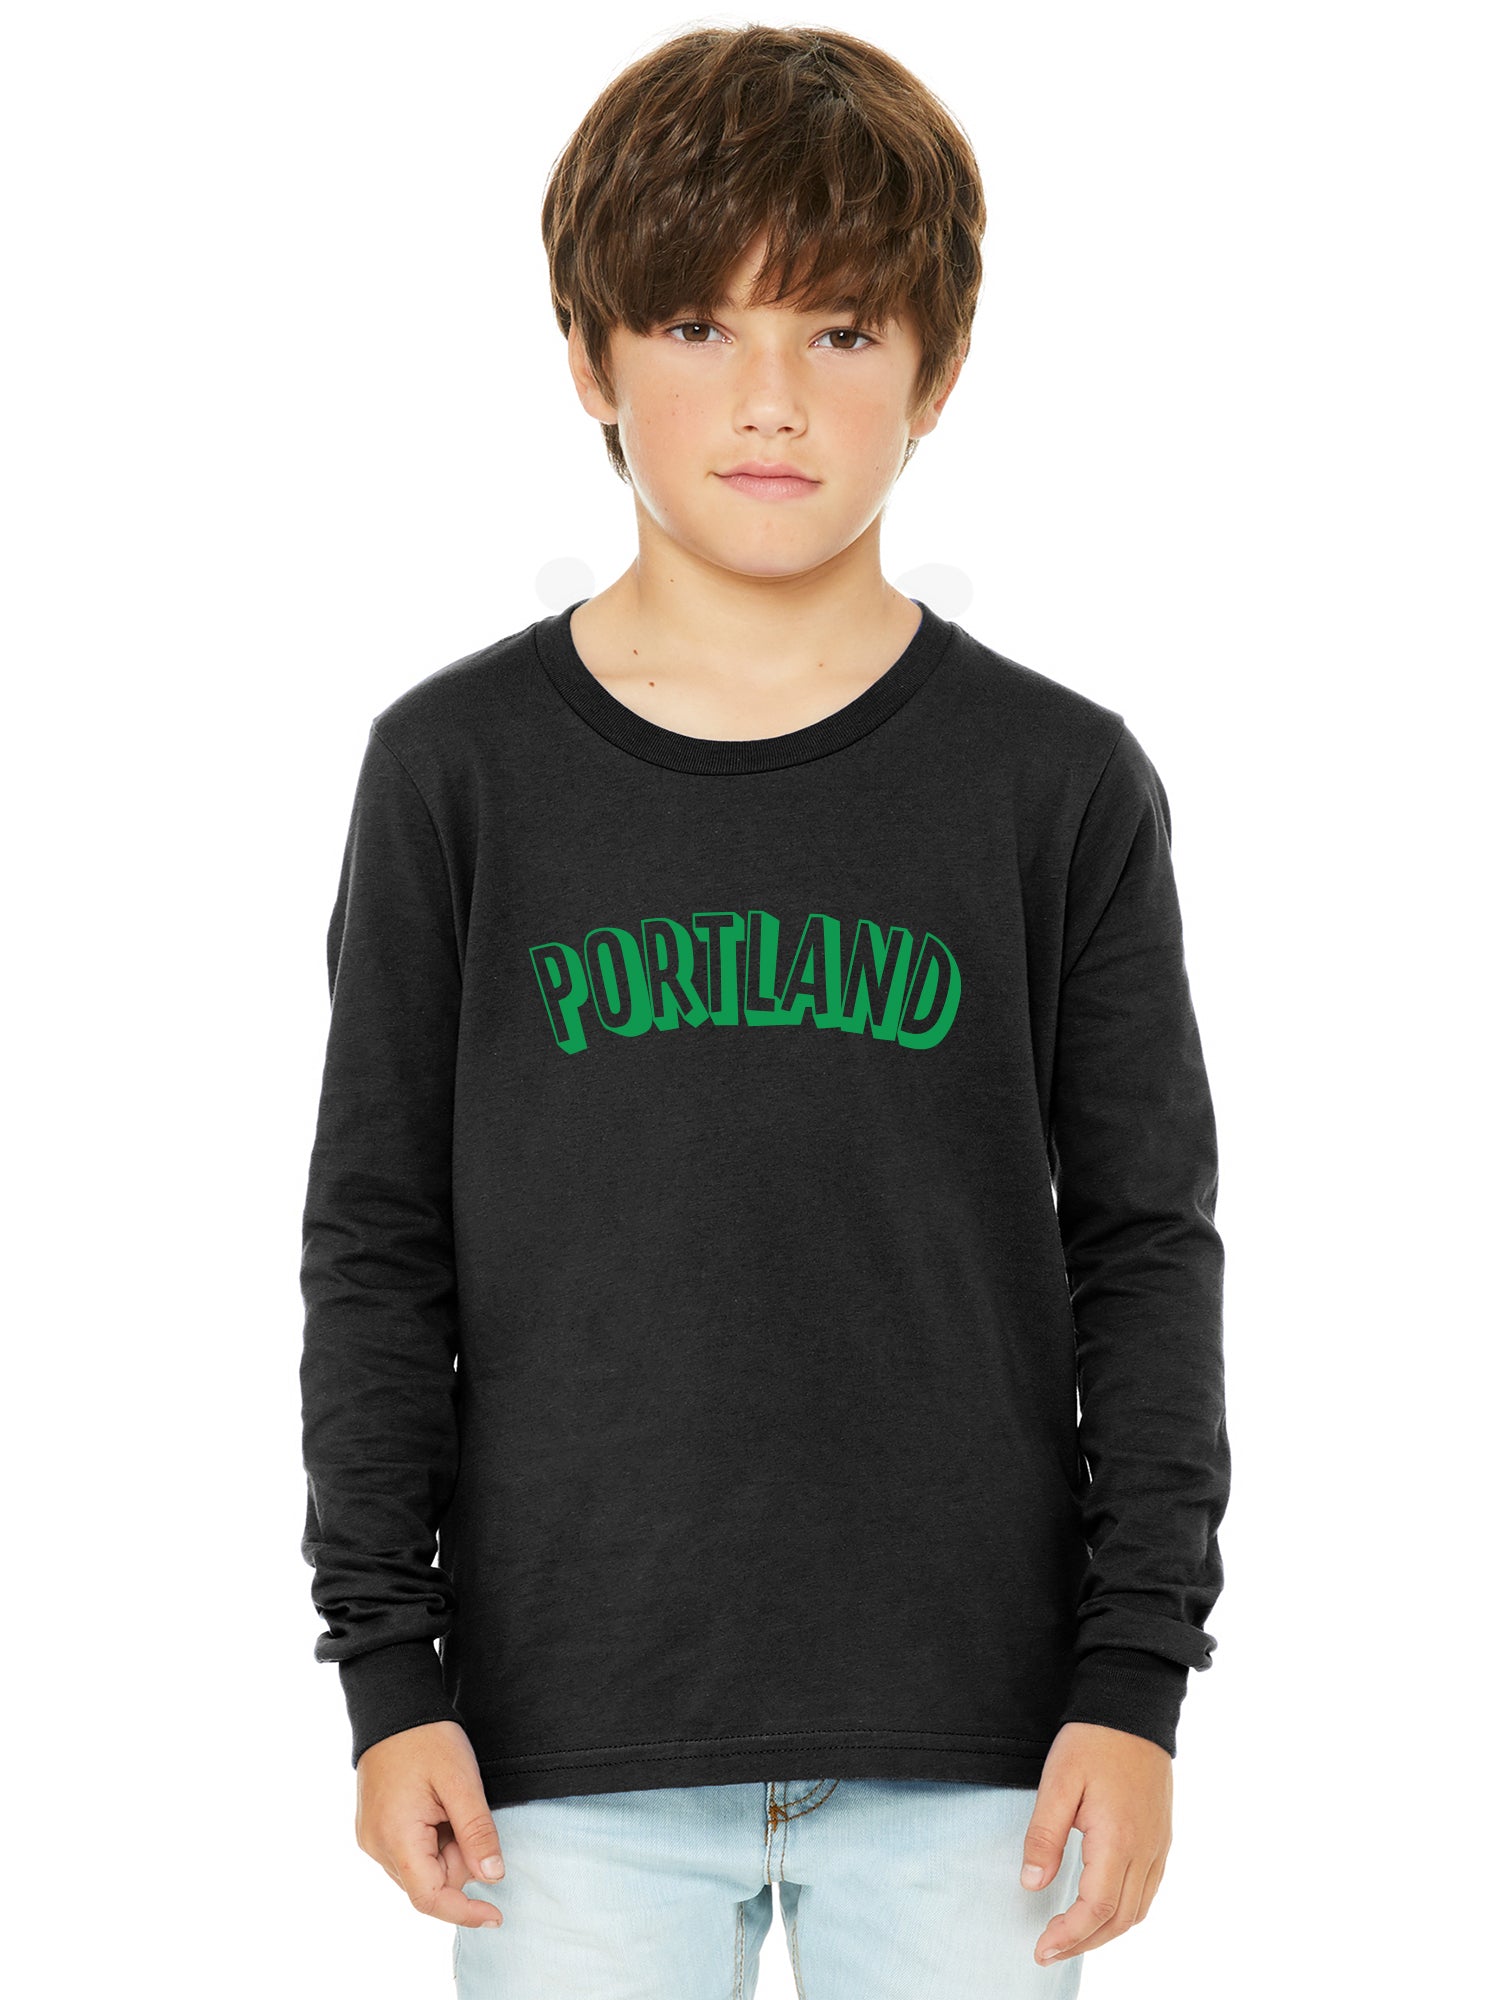 Portland Clothing